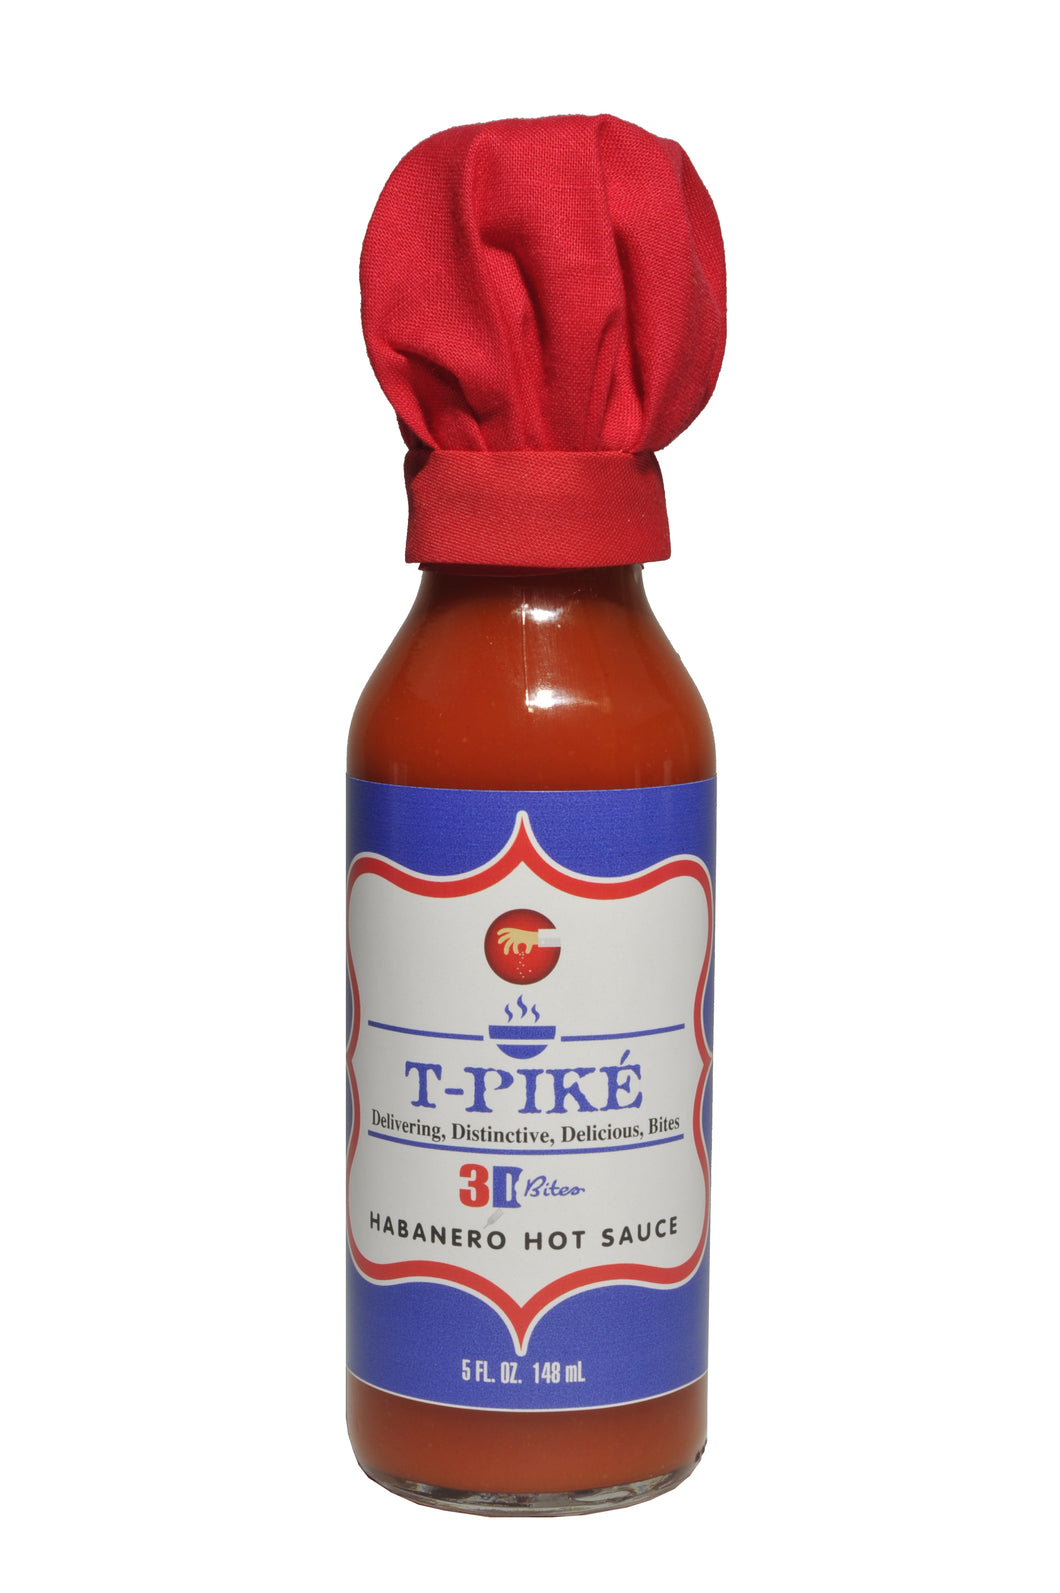 3DBites T-Pike Habanero Hot Sauce